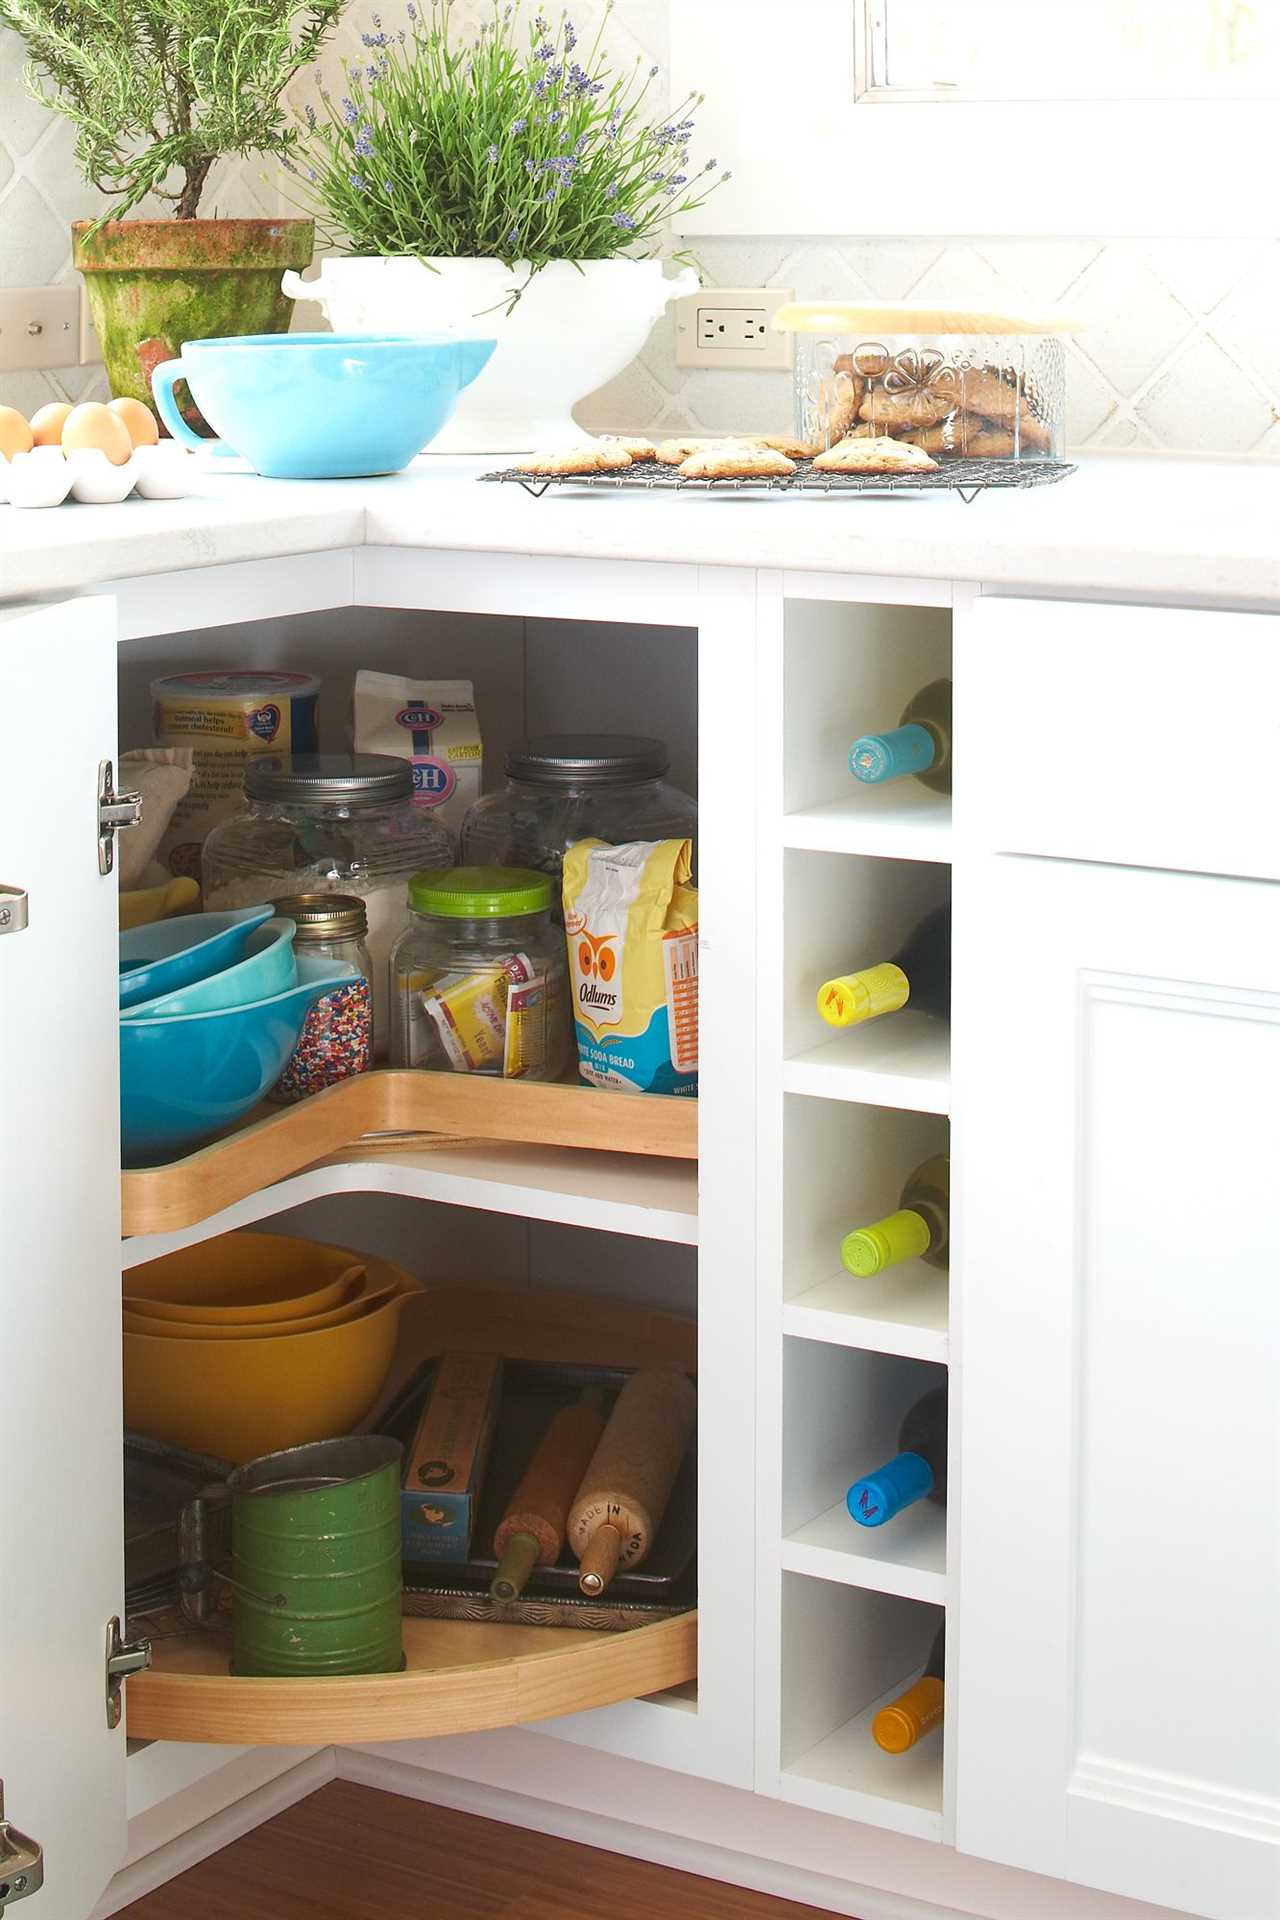 Section 1: Benefits of a Corner Kitchen Shelf